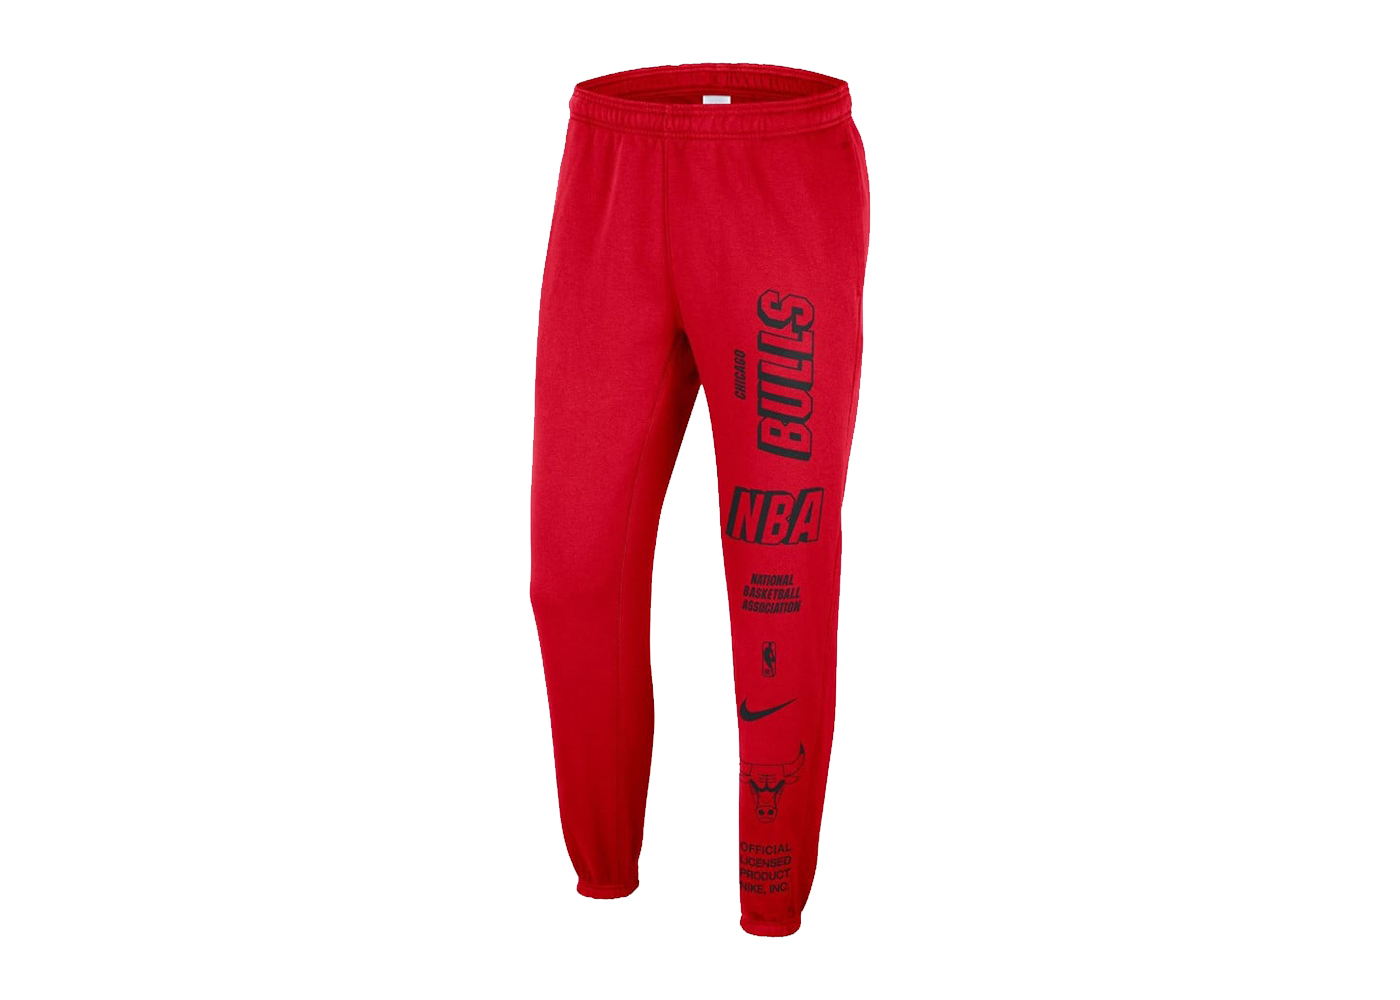 red sweatpants for men mens autumn winter leisure outdoor sports jogging  fit color foot mouth zipper pants - Walmart.com